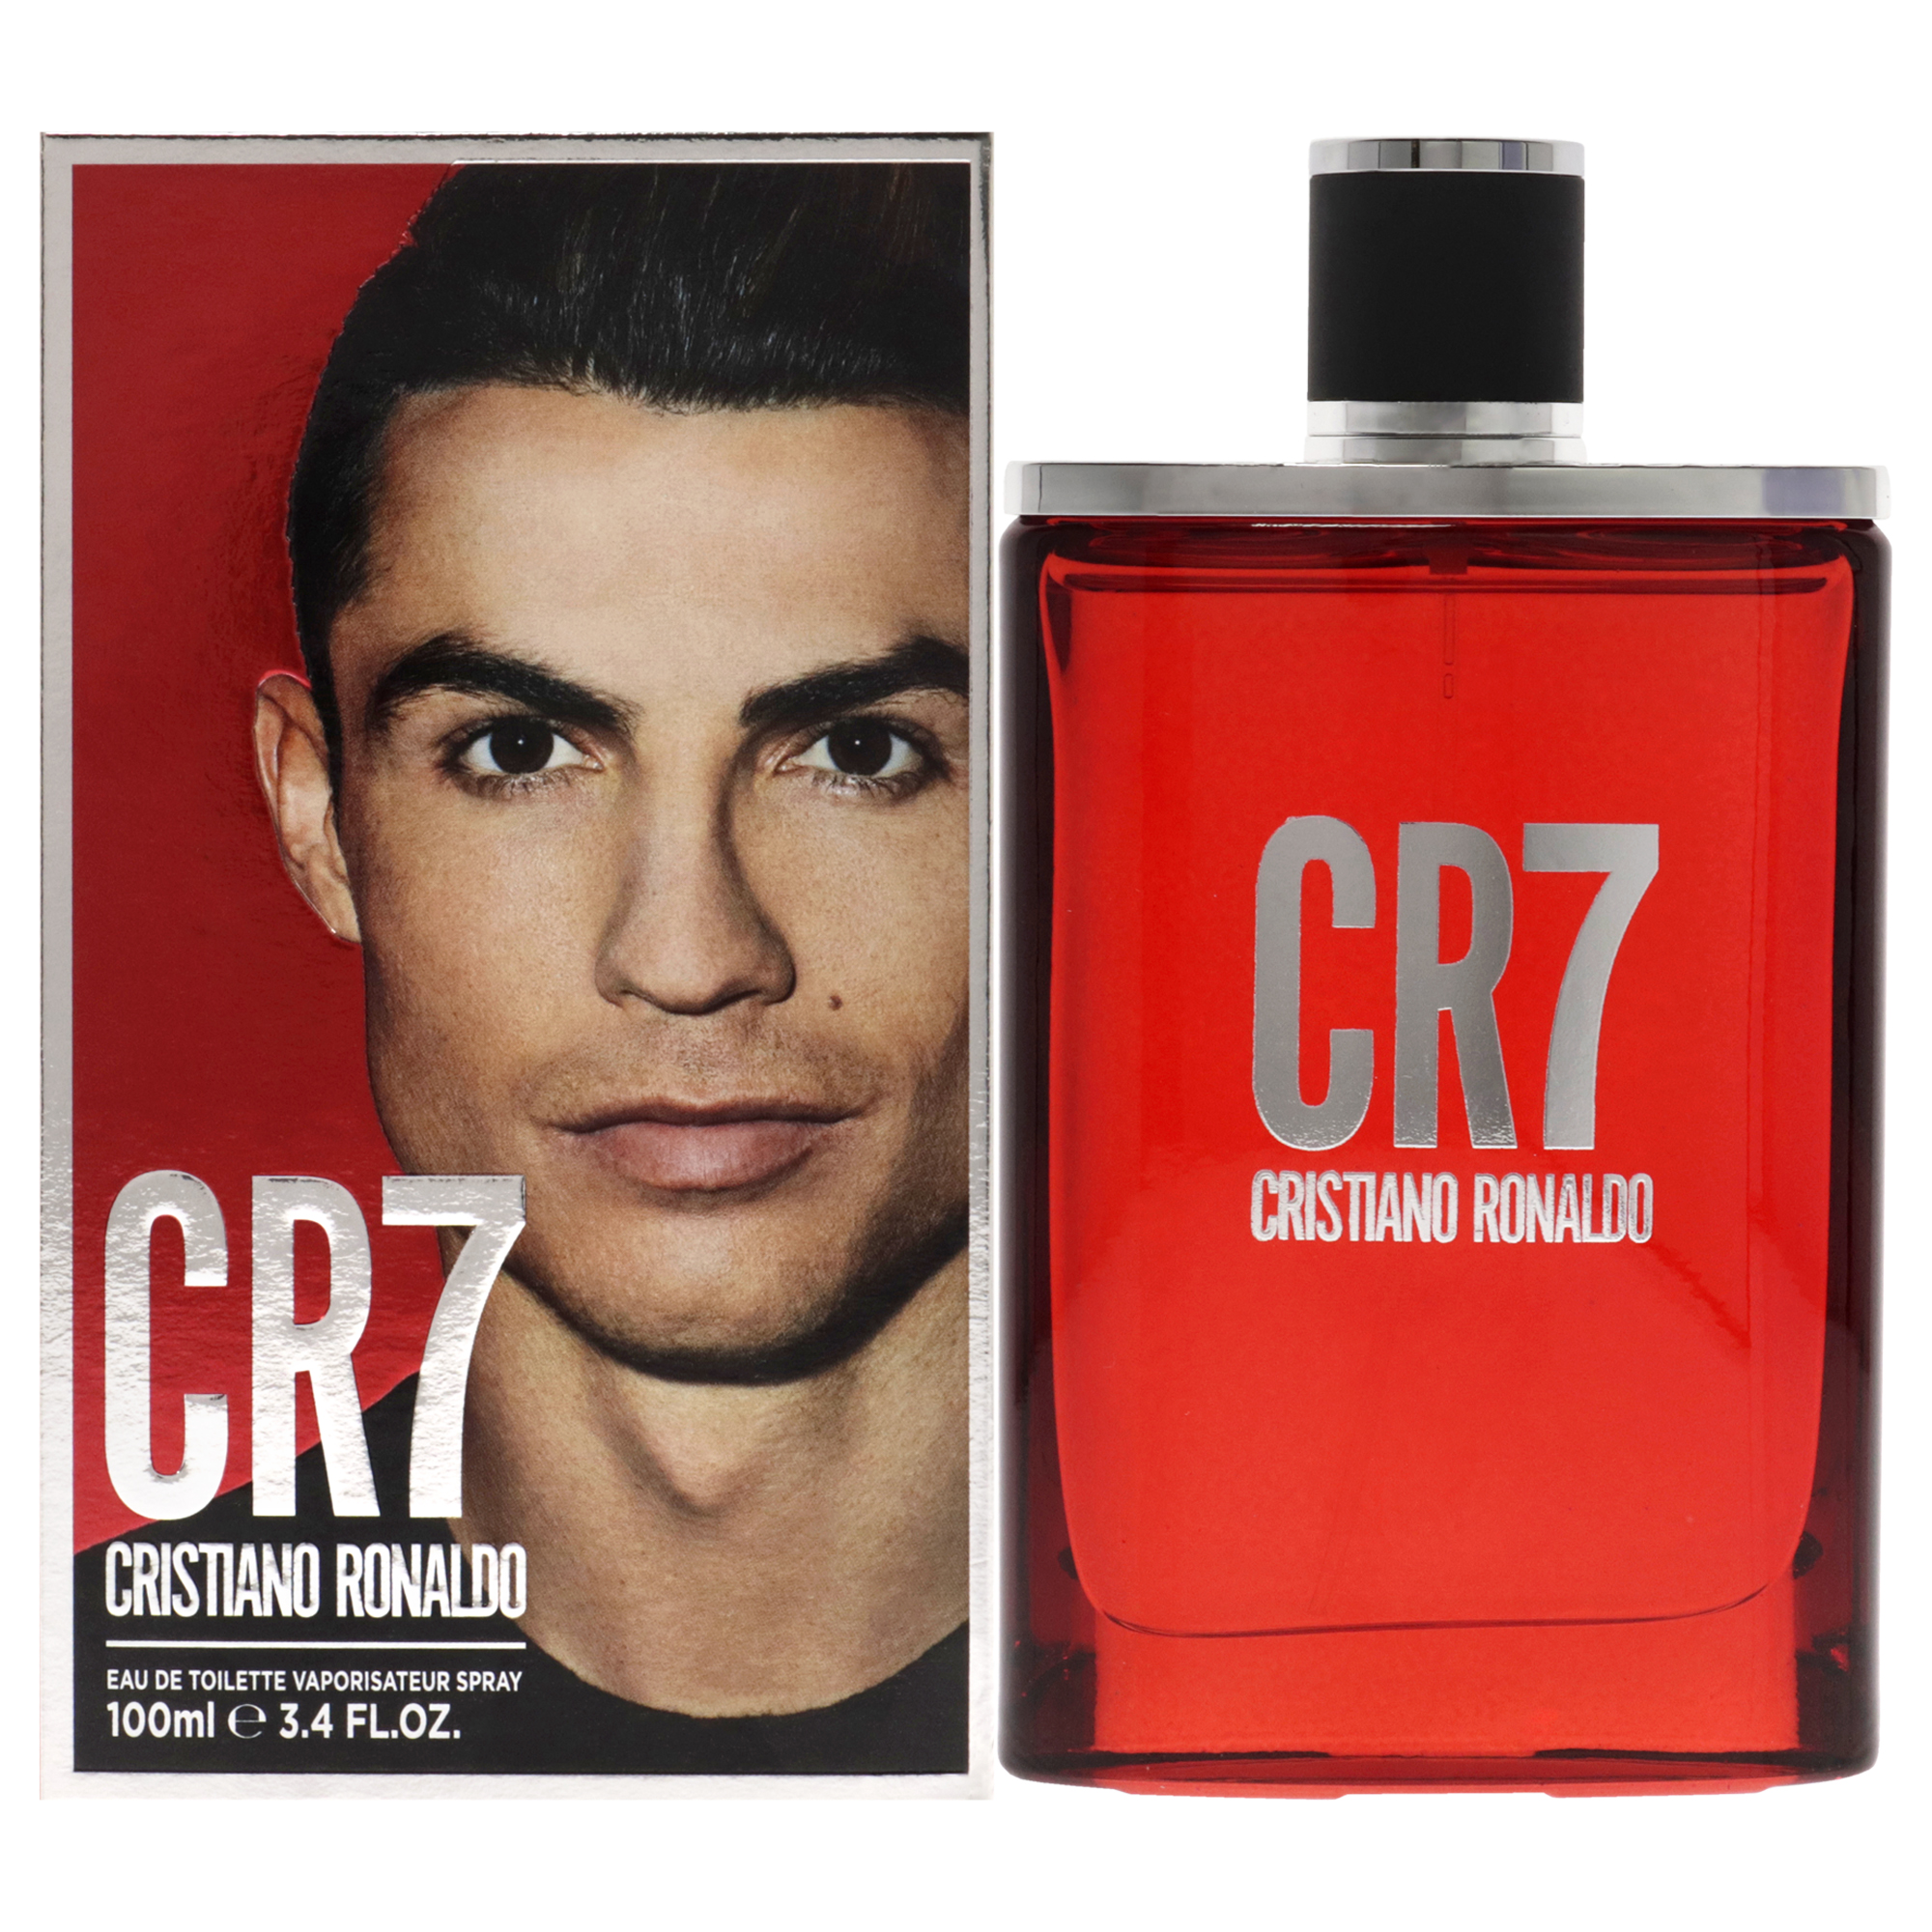 CR7 by Cristiano Ronaldo, EDT Spray for Men, 3.4 oz - image 1 of 6